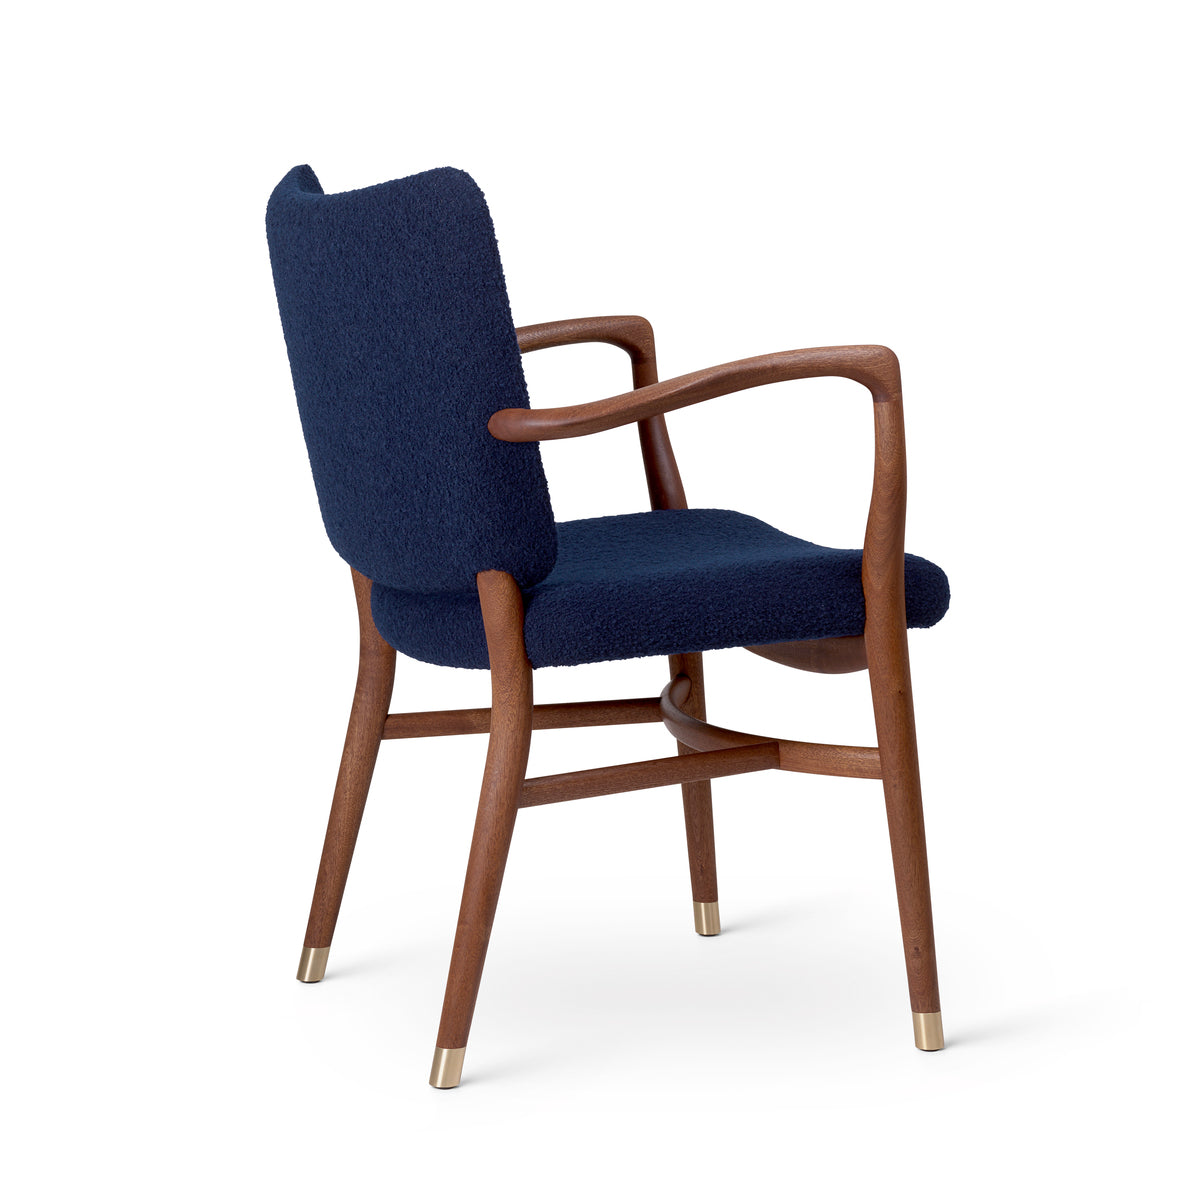 Carl Hansen VLA61 Monar CH fauteuil, huile en acajou / Baru 0780 textile